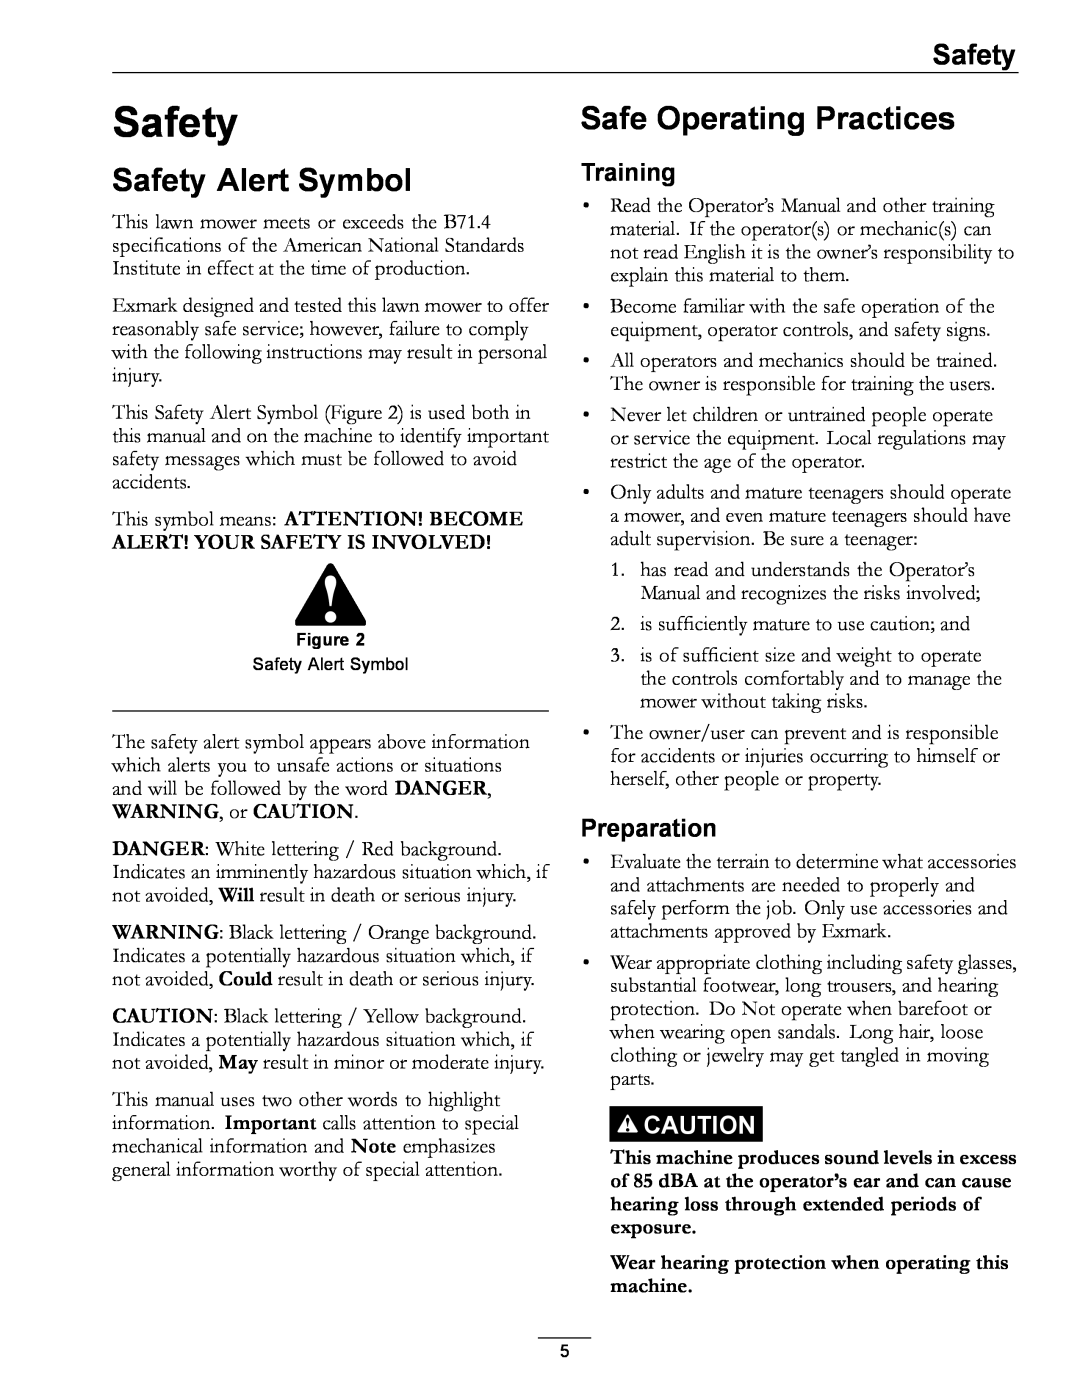 Exmark 920, 000 & higher manual Safety Alert Symbol, Safe Operating Practices, Training, Preparation 